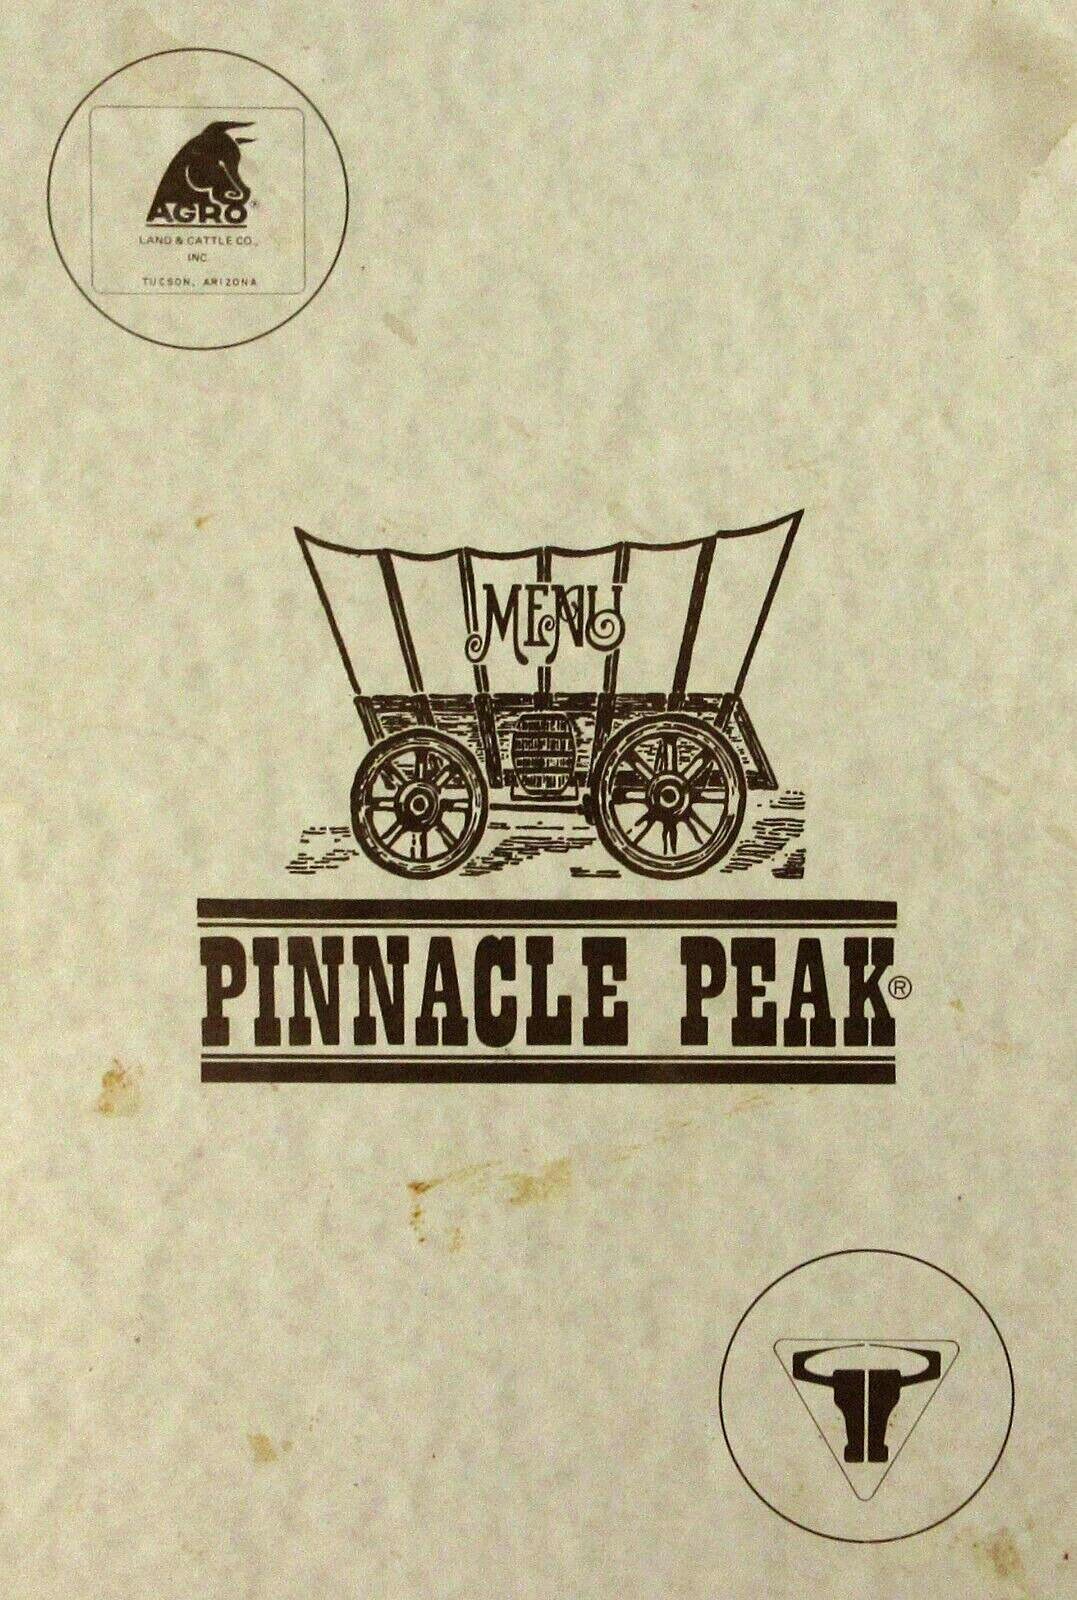 Vintage Steakhouse Restaurant Menu Pinnacle Peak Agro Cattle Co Tucson AZ 1970s